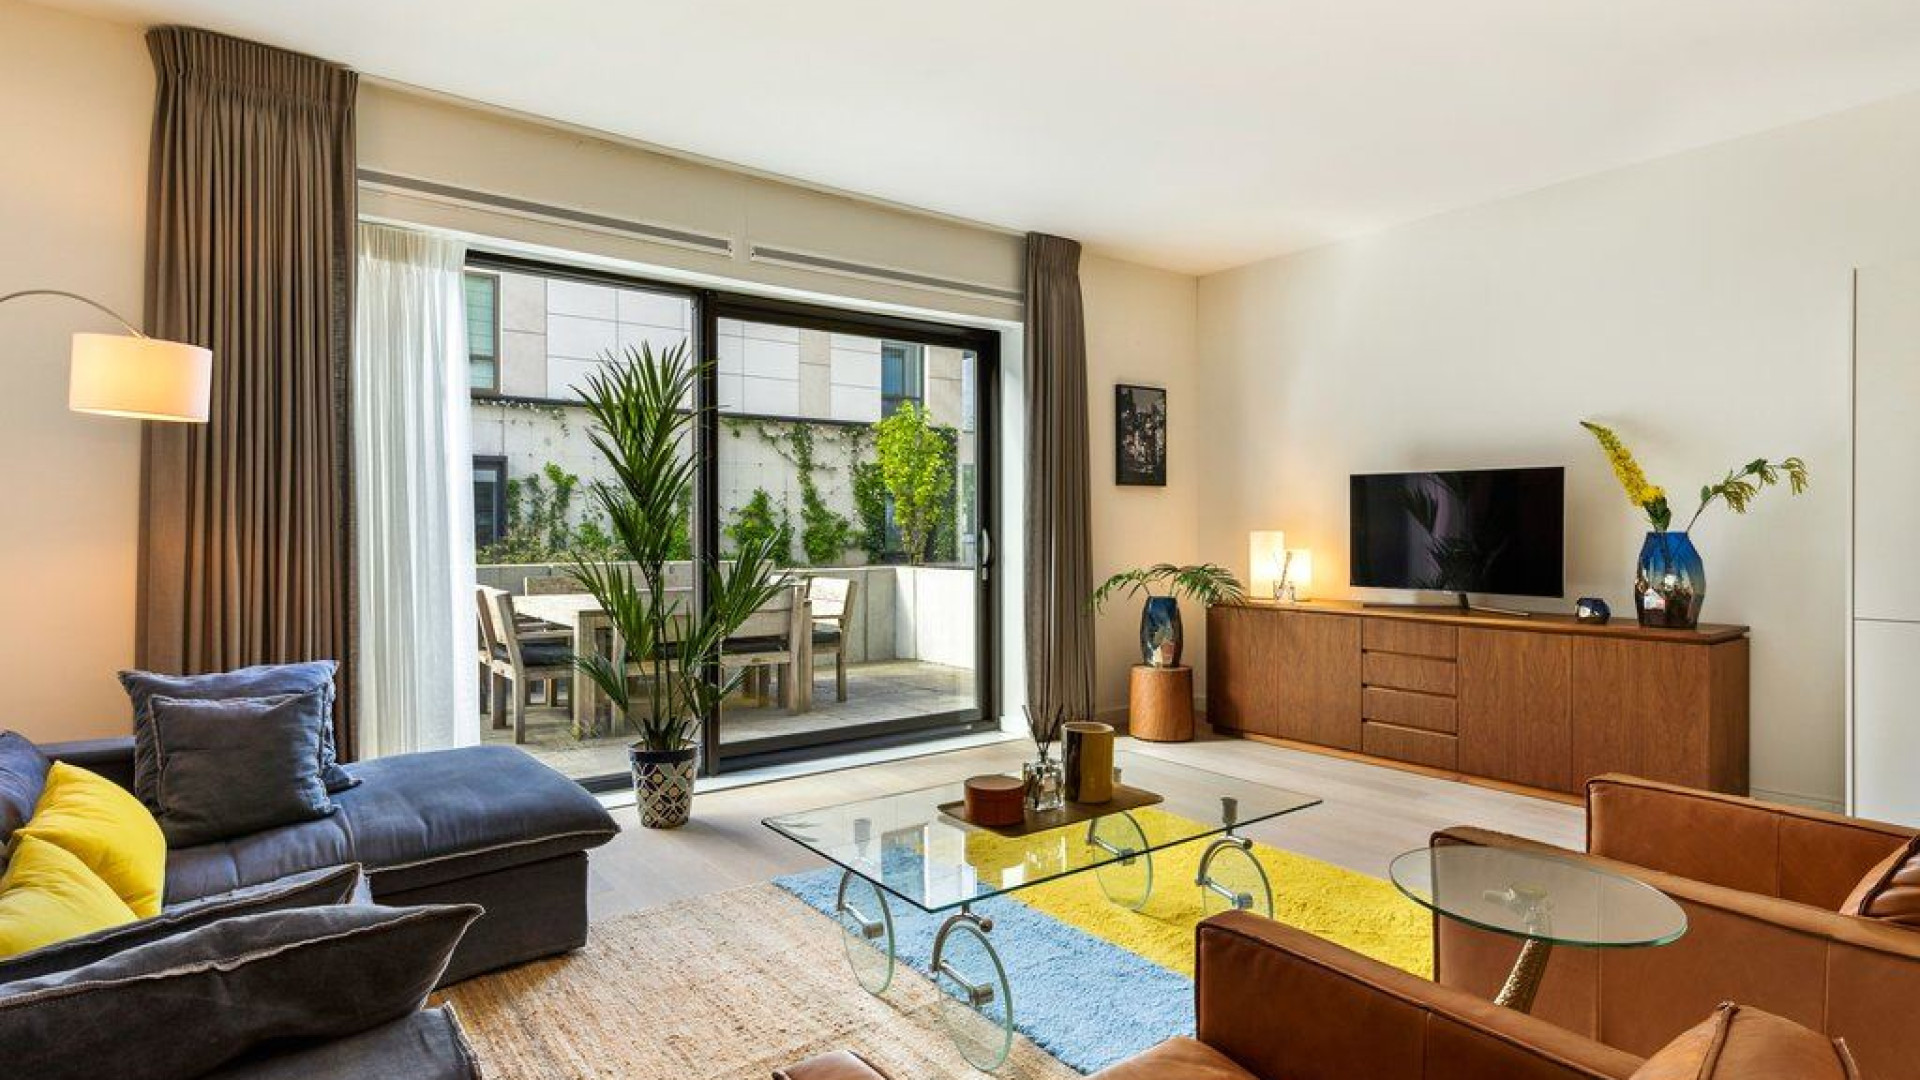 Touriya Haoud verhuist naar dit luxe en dure Amsterdamse appartement. Zie foto's